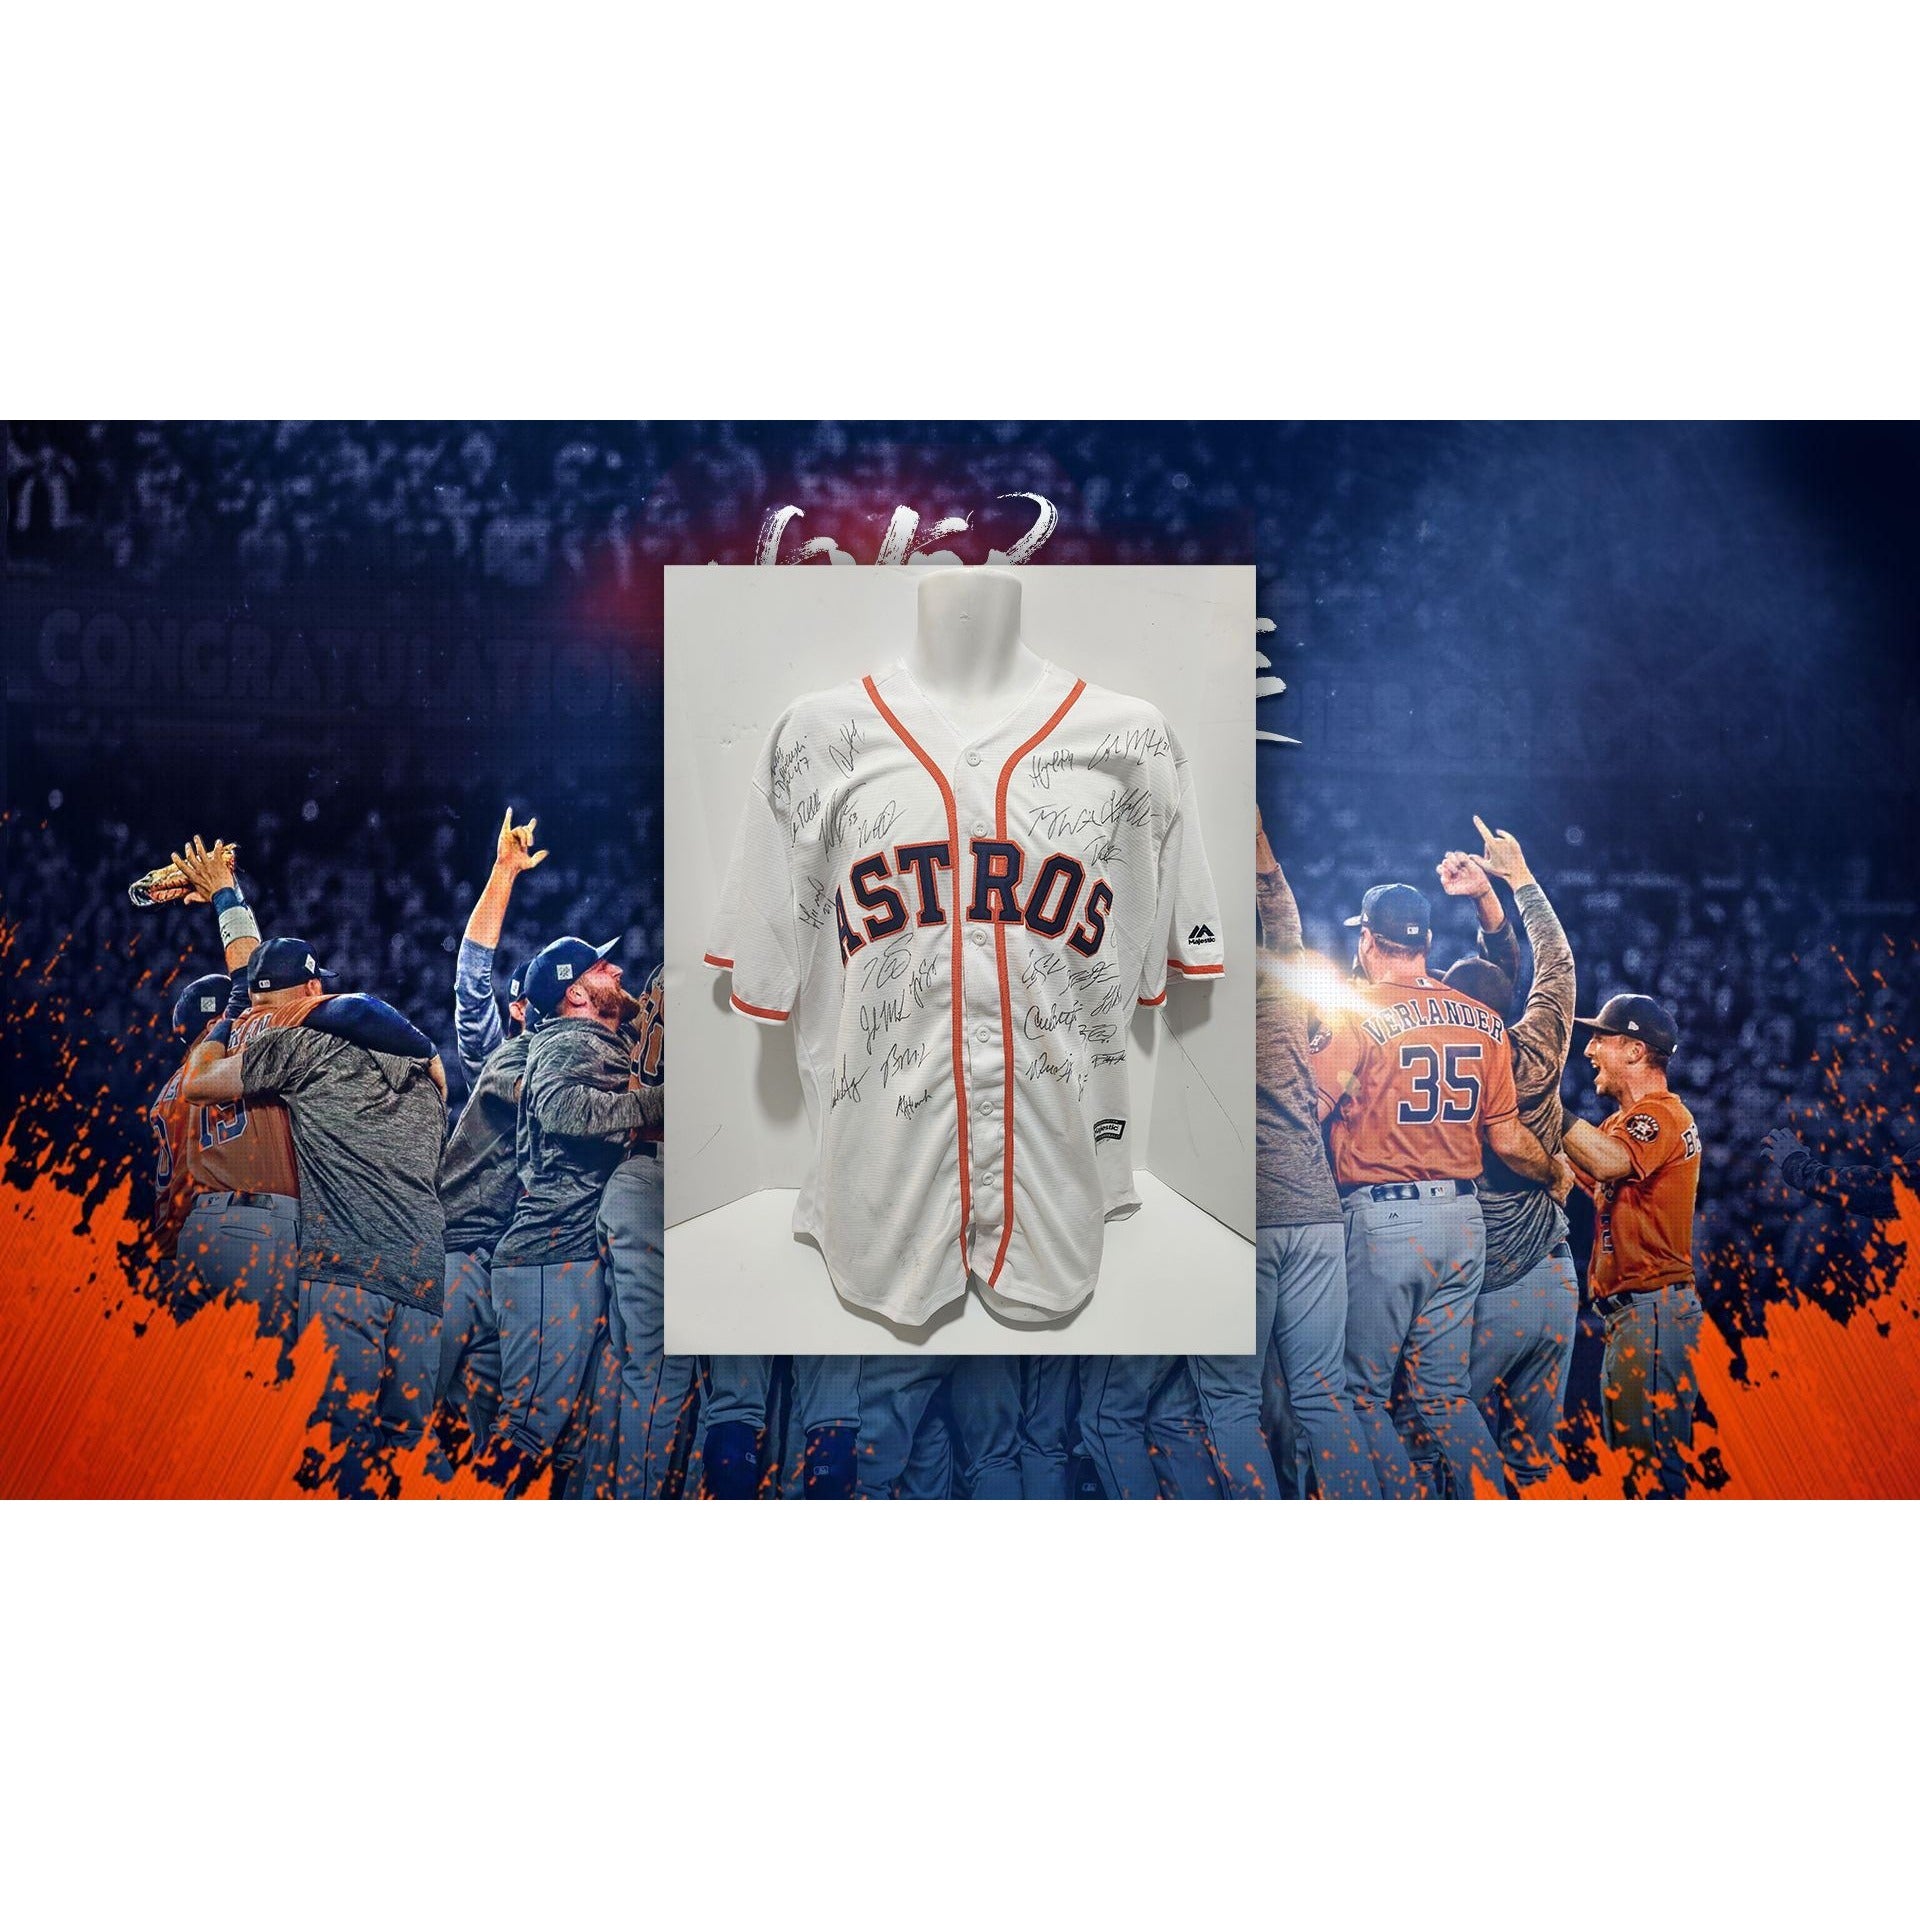 2017 Authentic Jose Altuve World Series Jersey 44 - Houston Astros